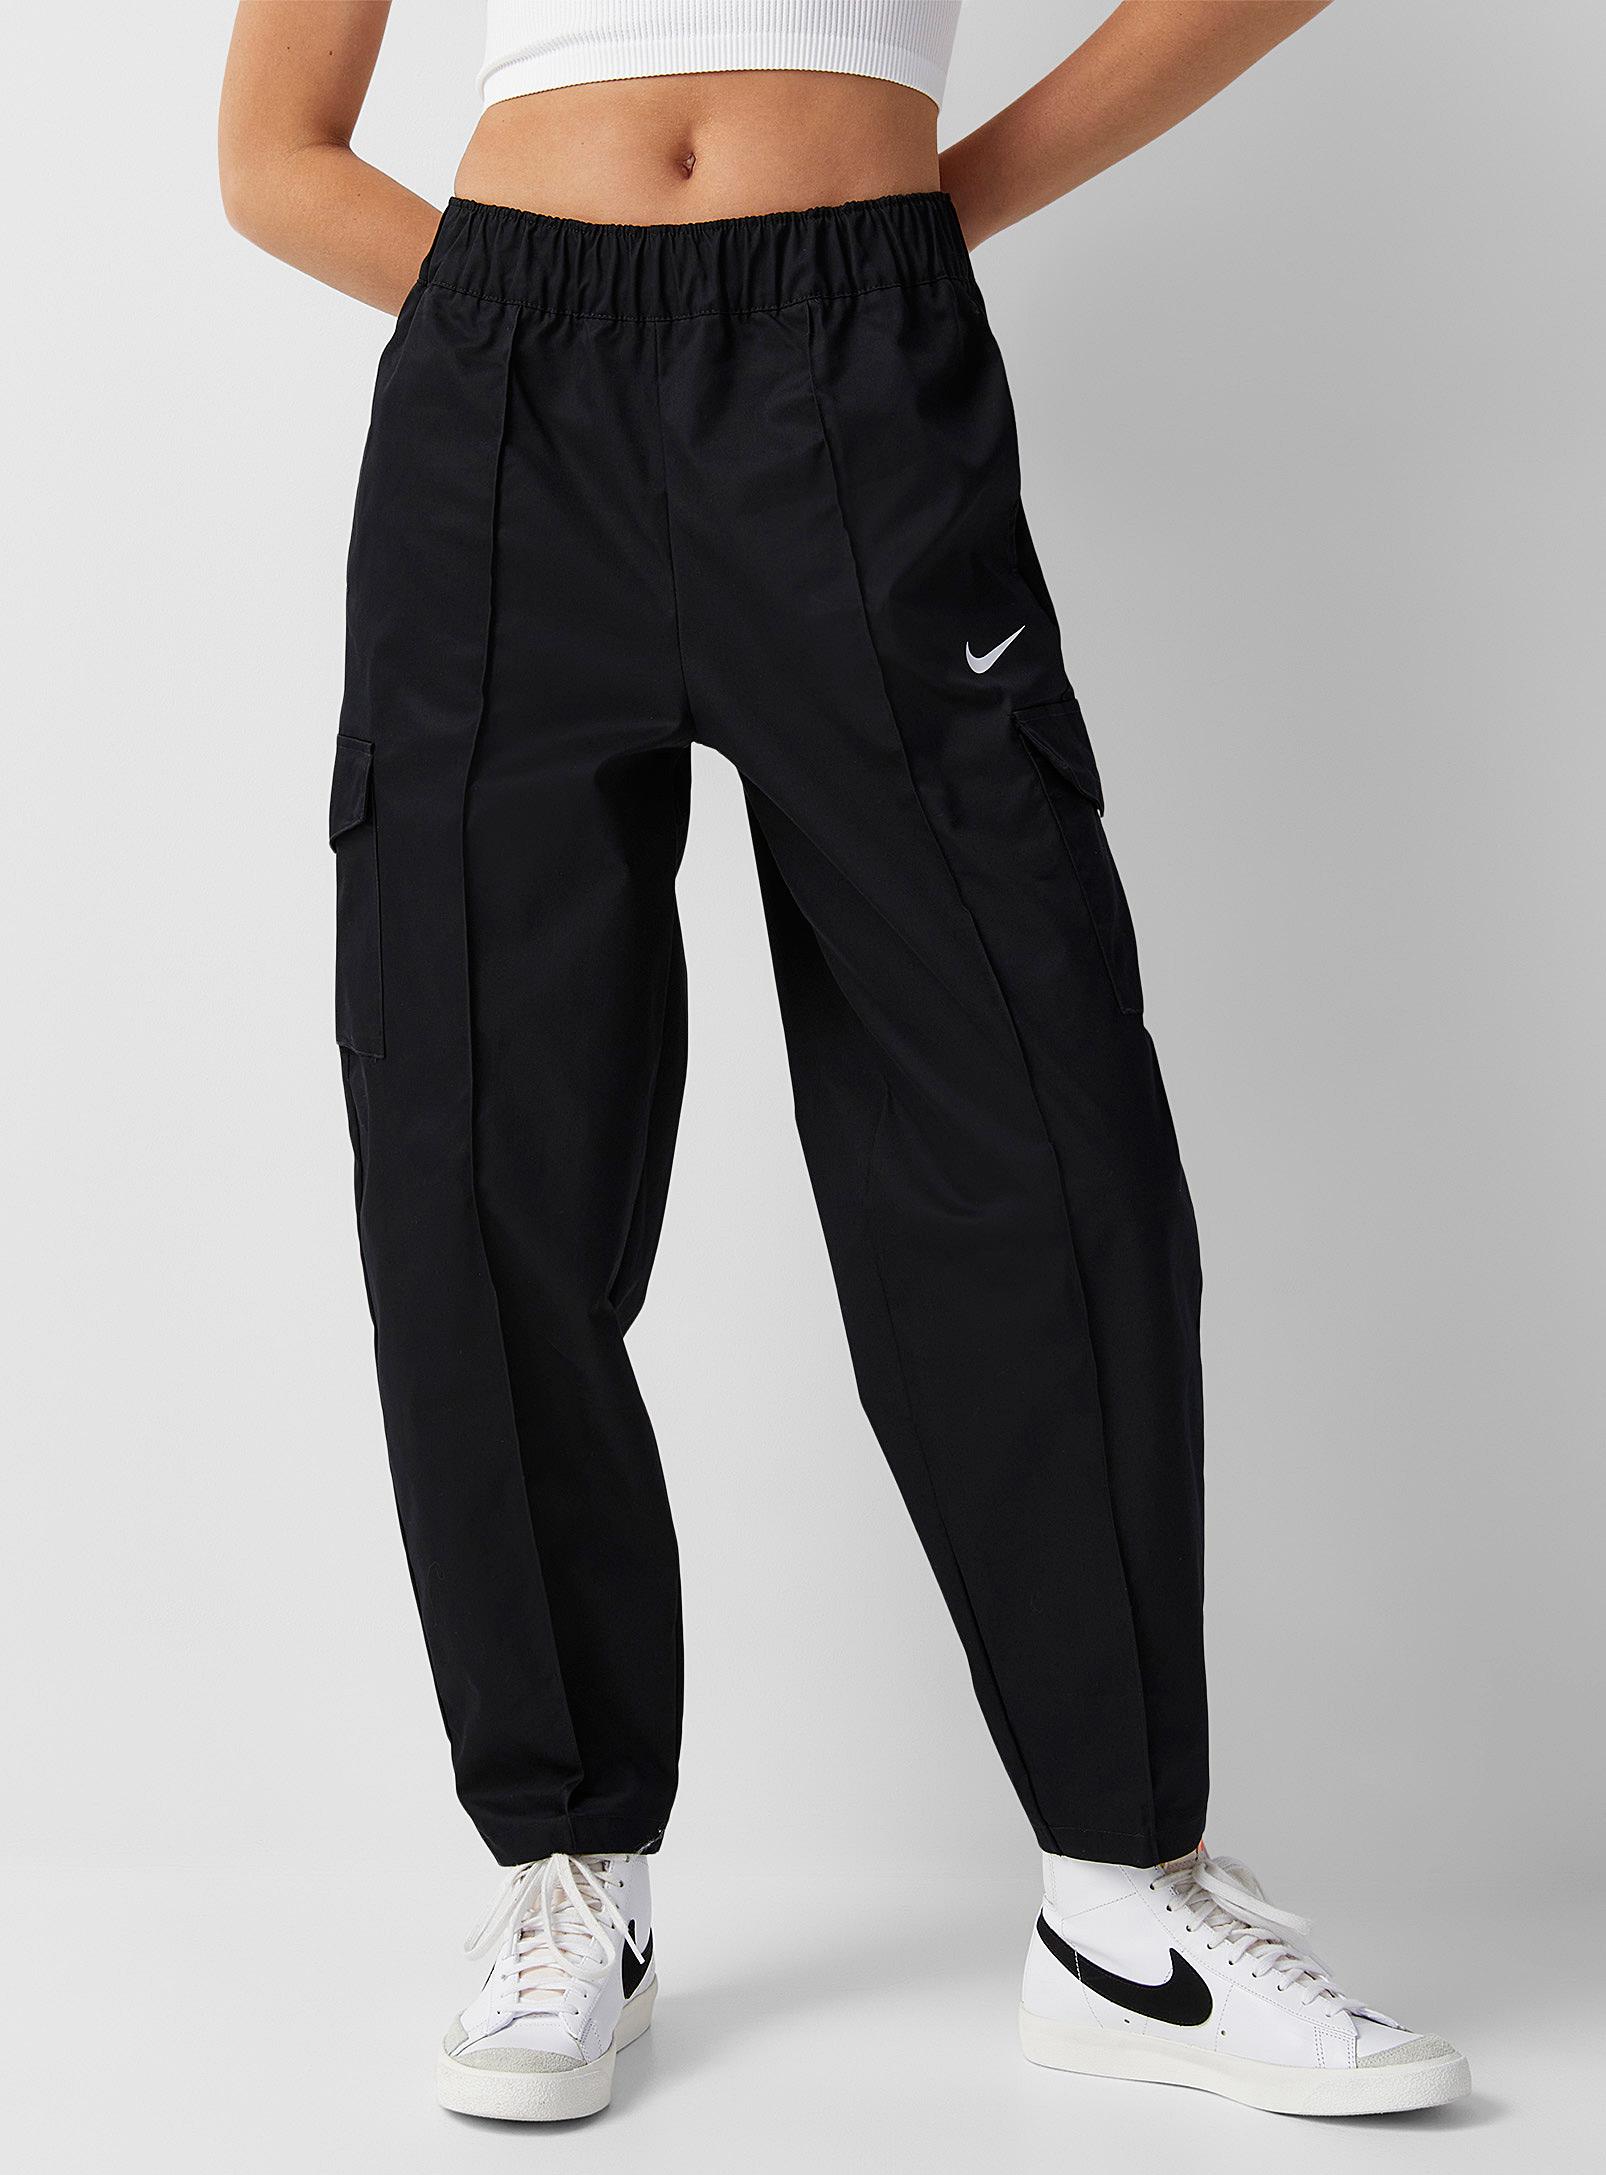 Nike Twill Cargo Pant in Black | Lyst